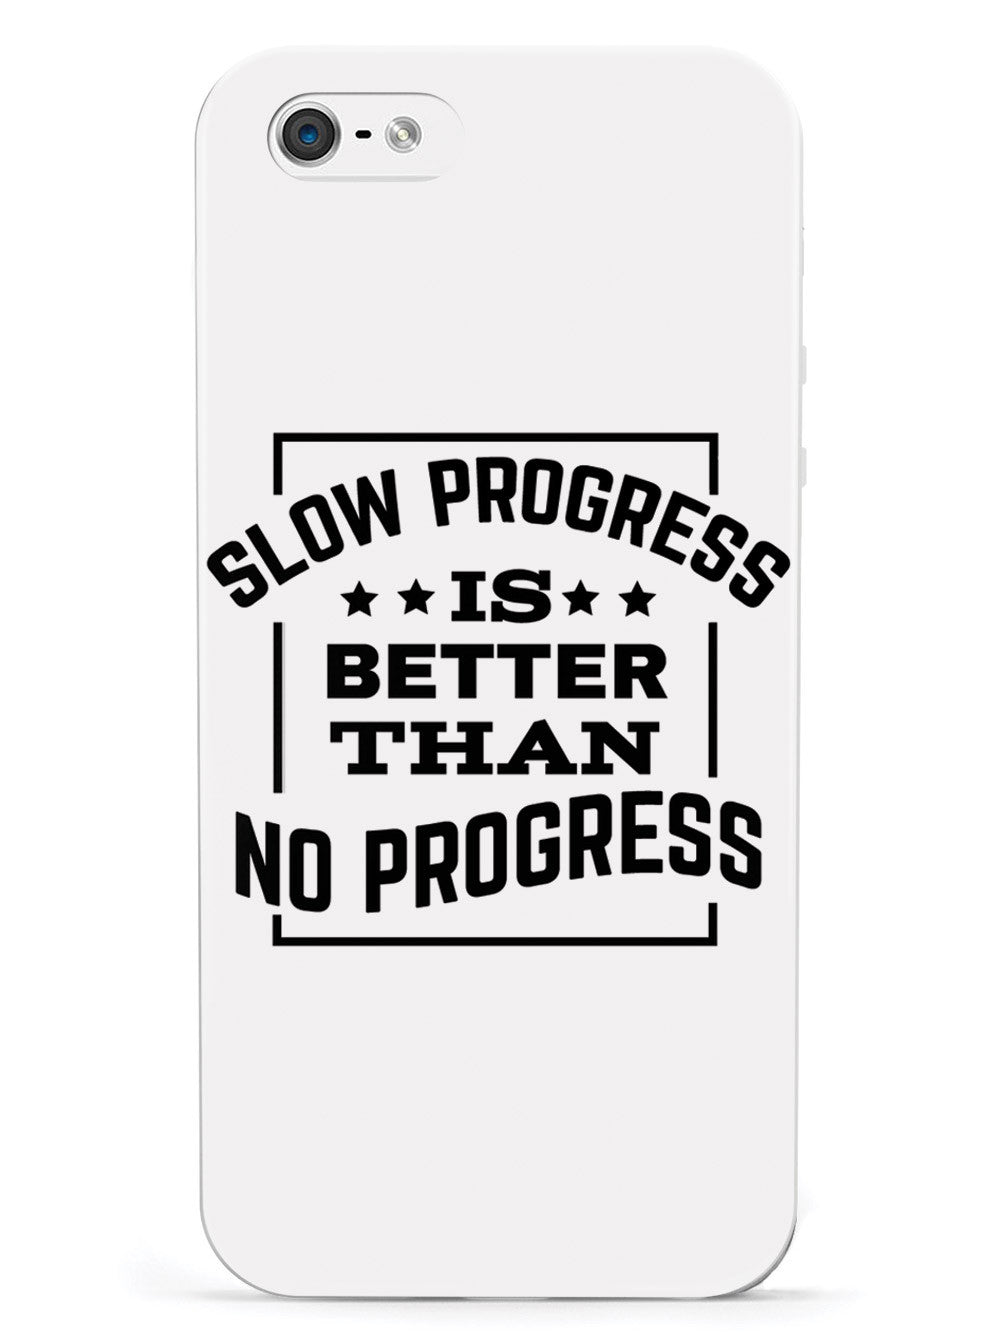 Slow Progress is Better than No Progress - White Case